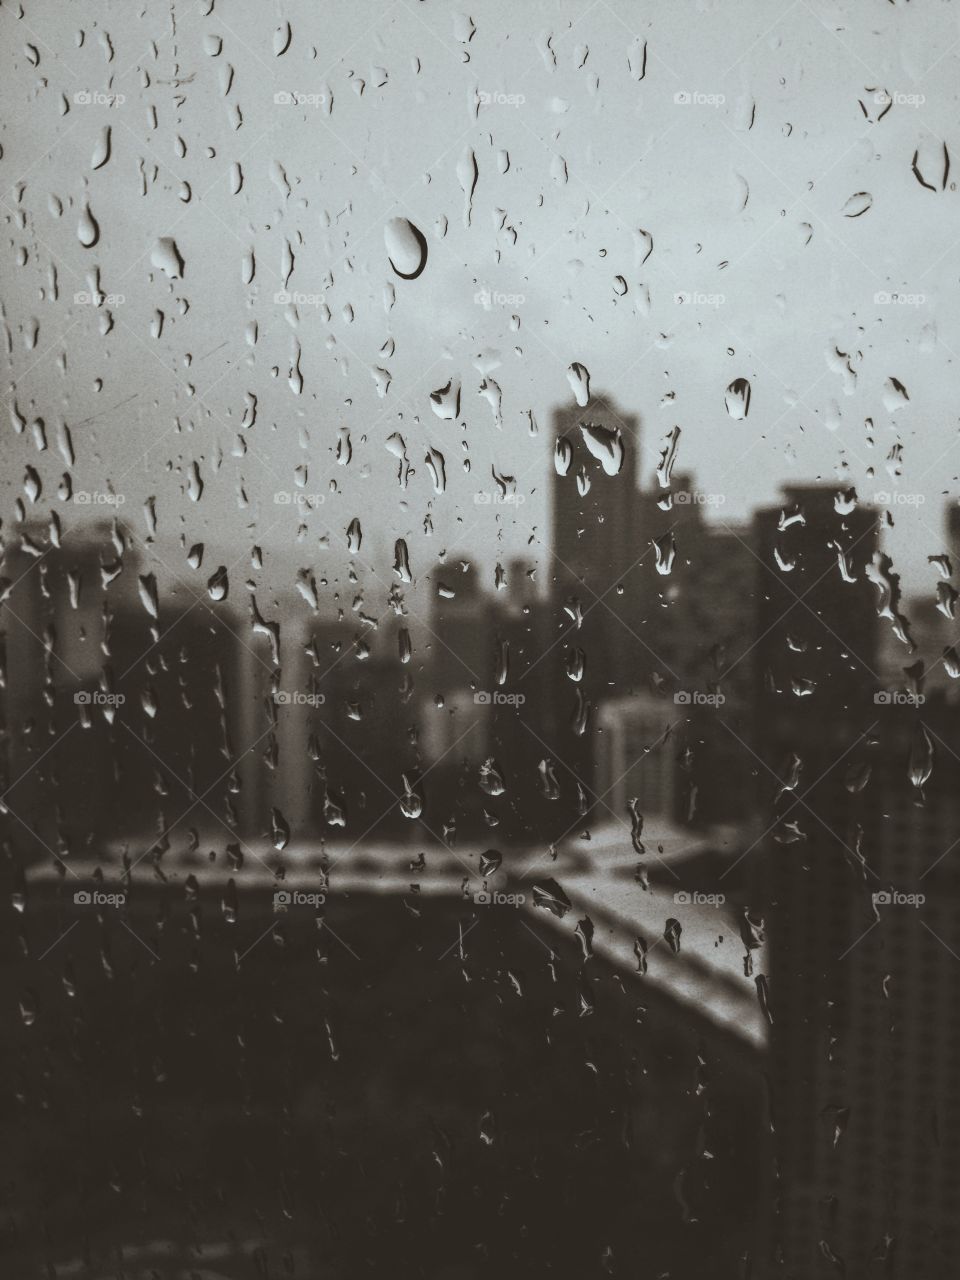 Glass and rain